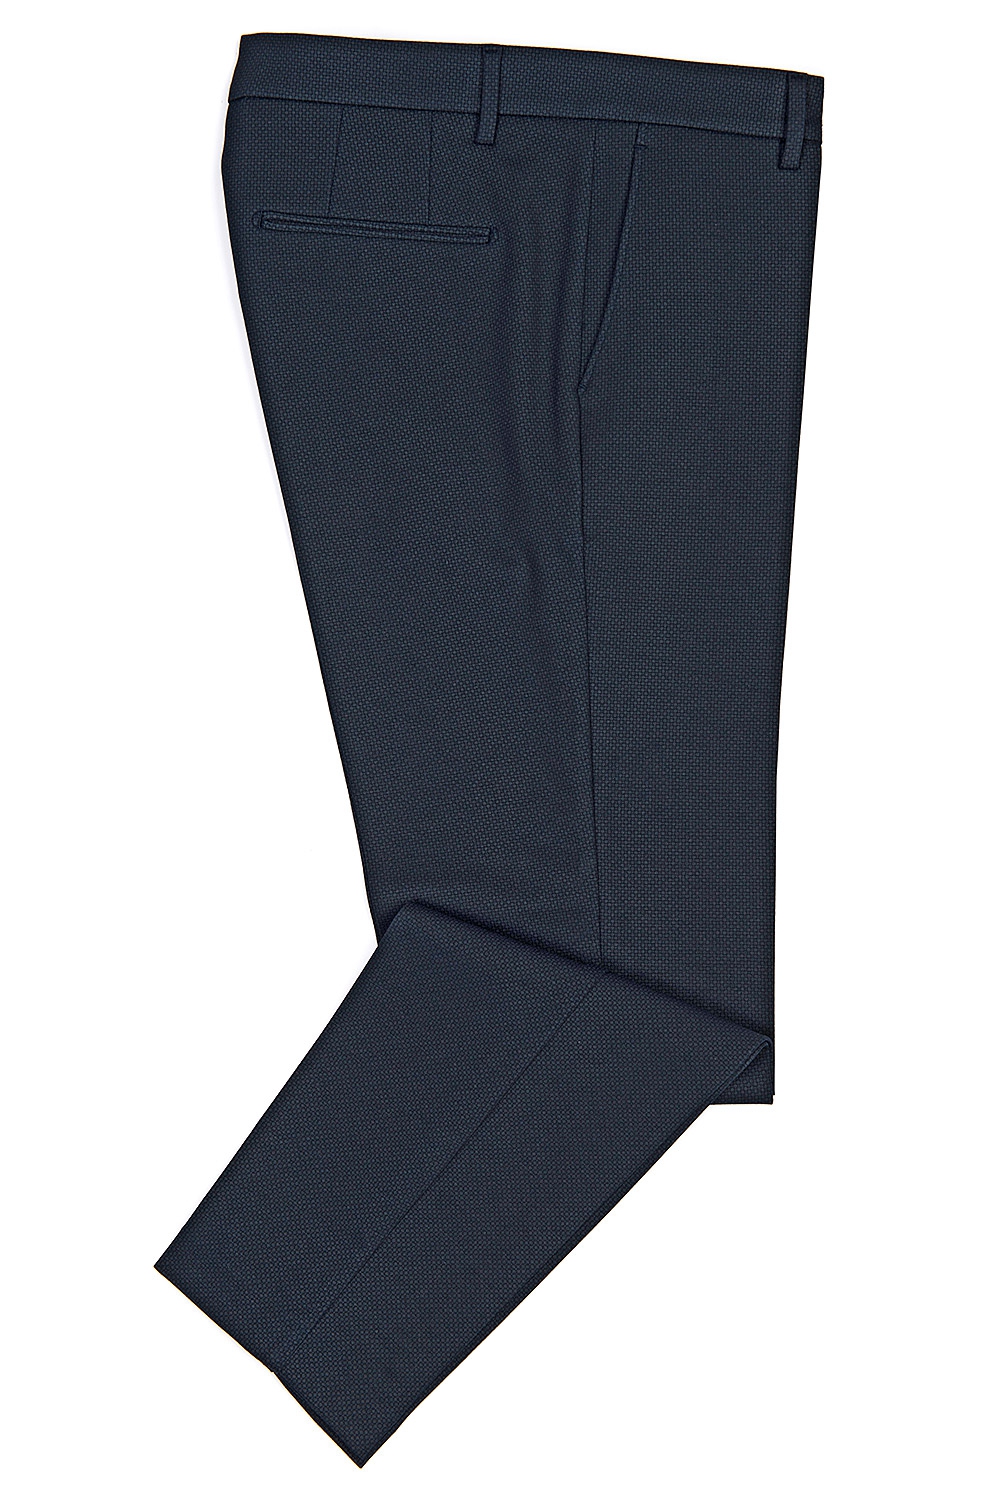 Pantaloni slim bleumarin print geometric 0